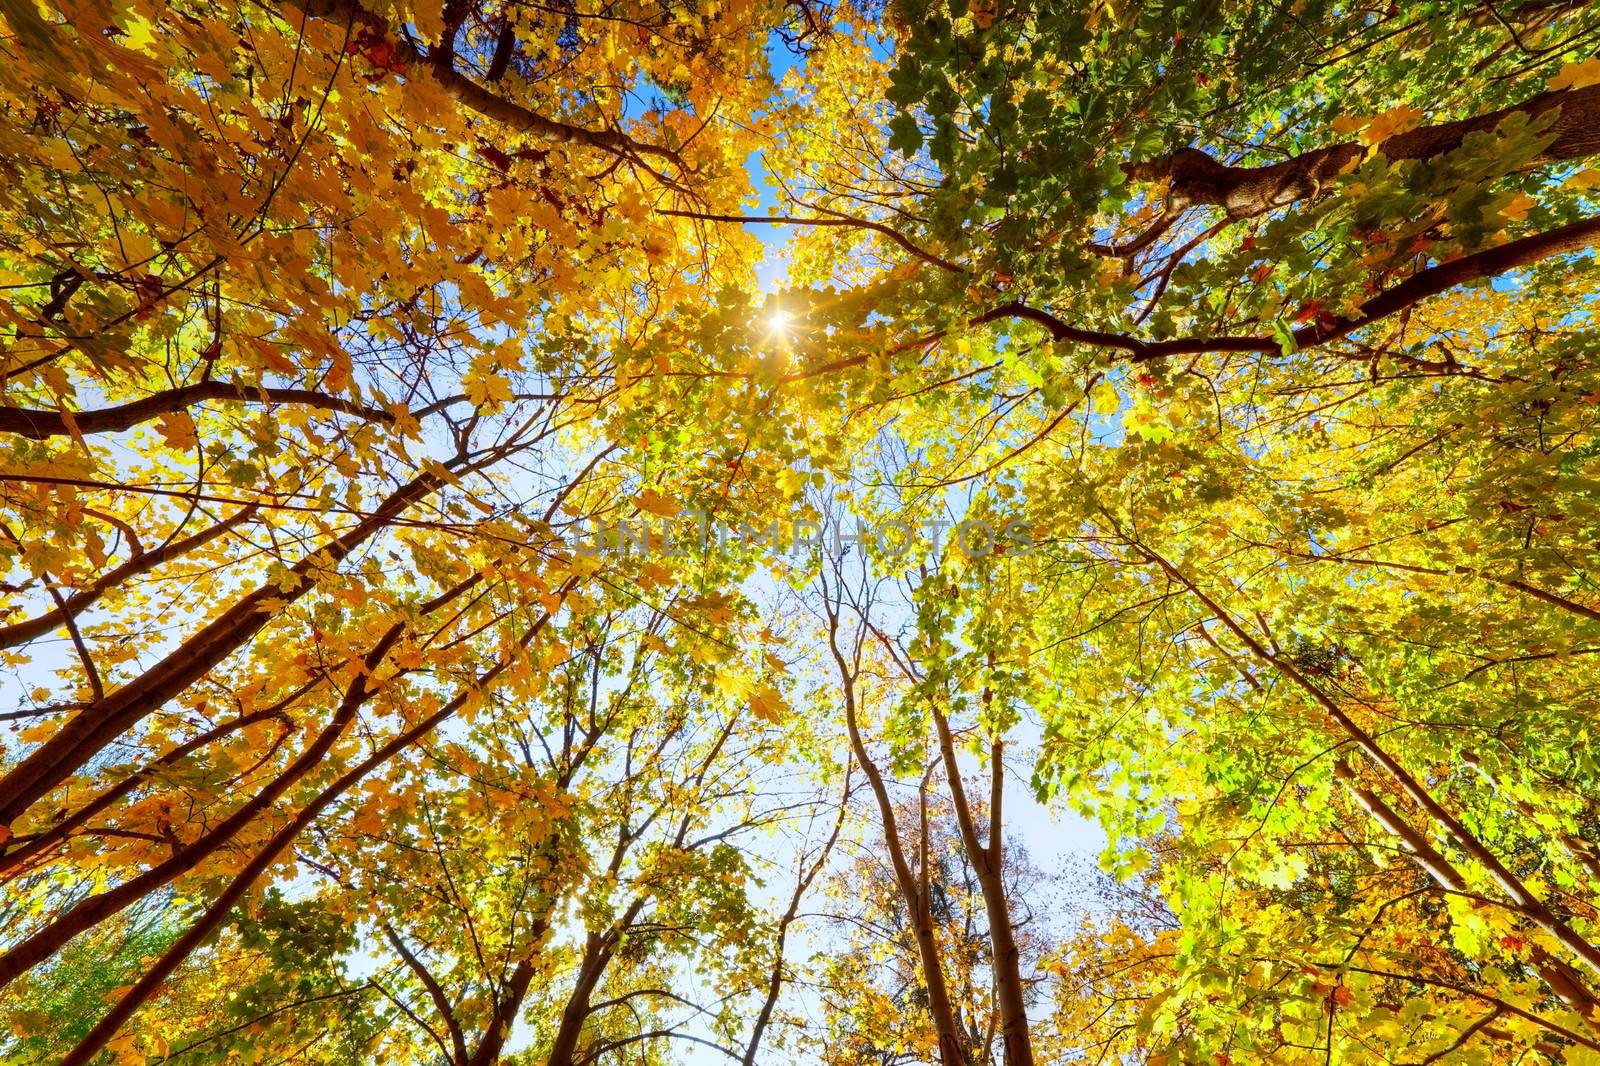 Autumn, fall trees. Sun shining through colorful leaves, blue sky